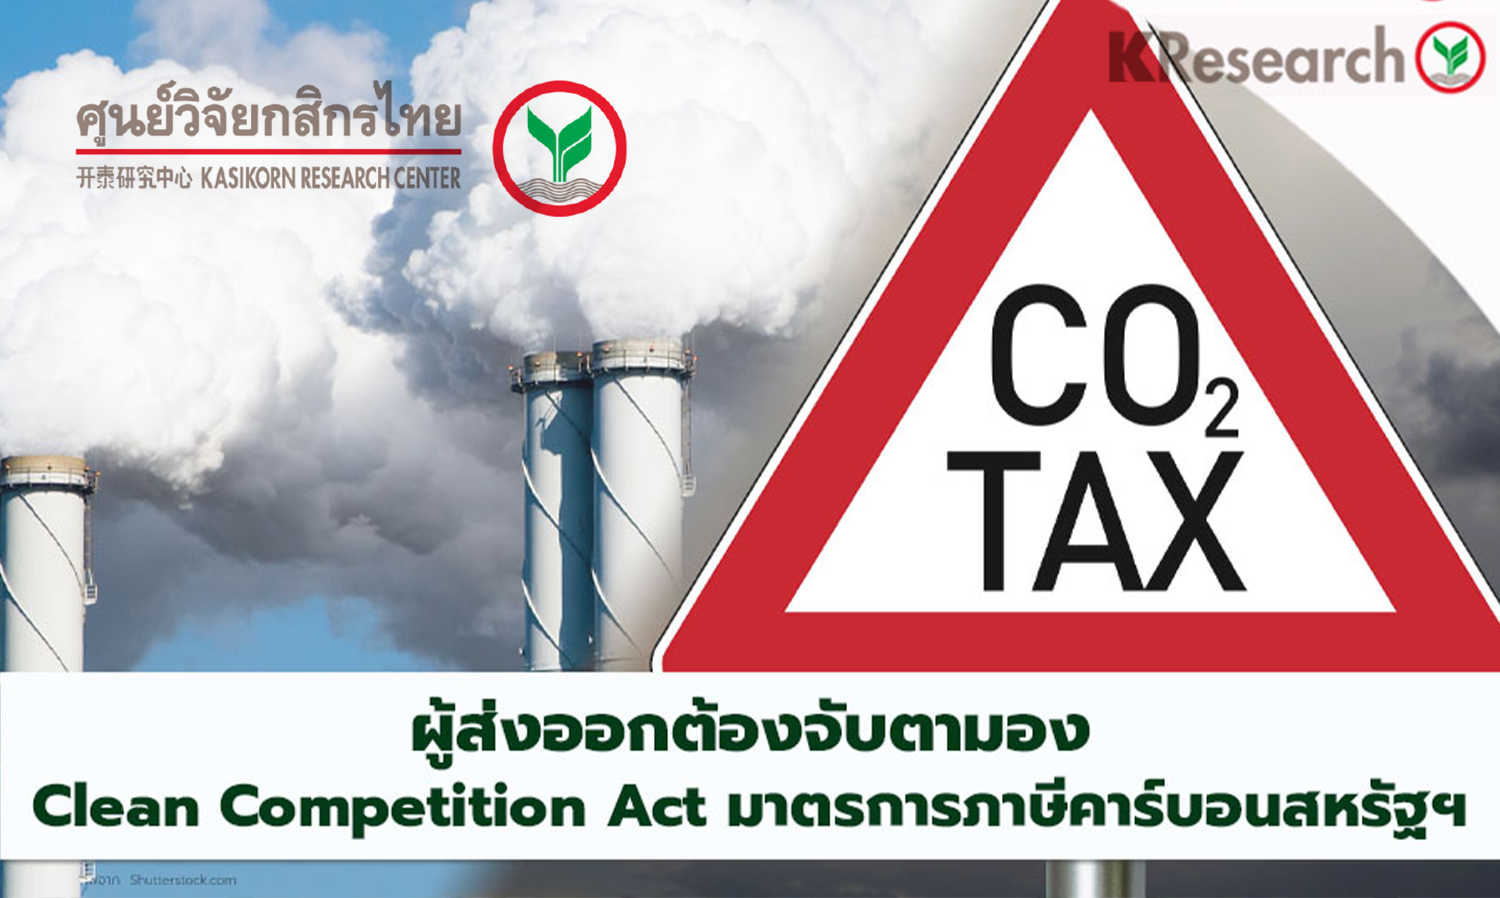 Clean Competition Act กับมาตรการภาษีคาร์บอนสหรัฐฯ ที่ผู้ส่งออกต้องจับตามอง (ศูนย์วิจัยกสิกรไทย)